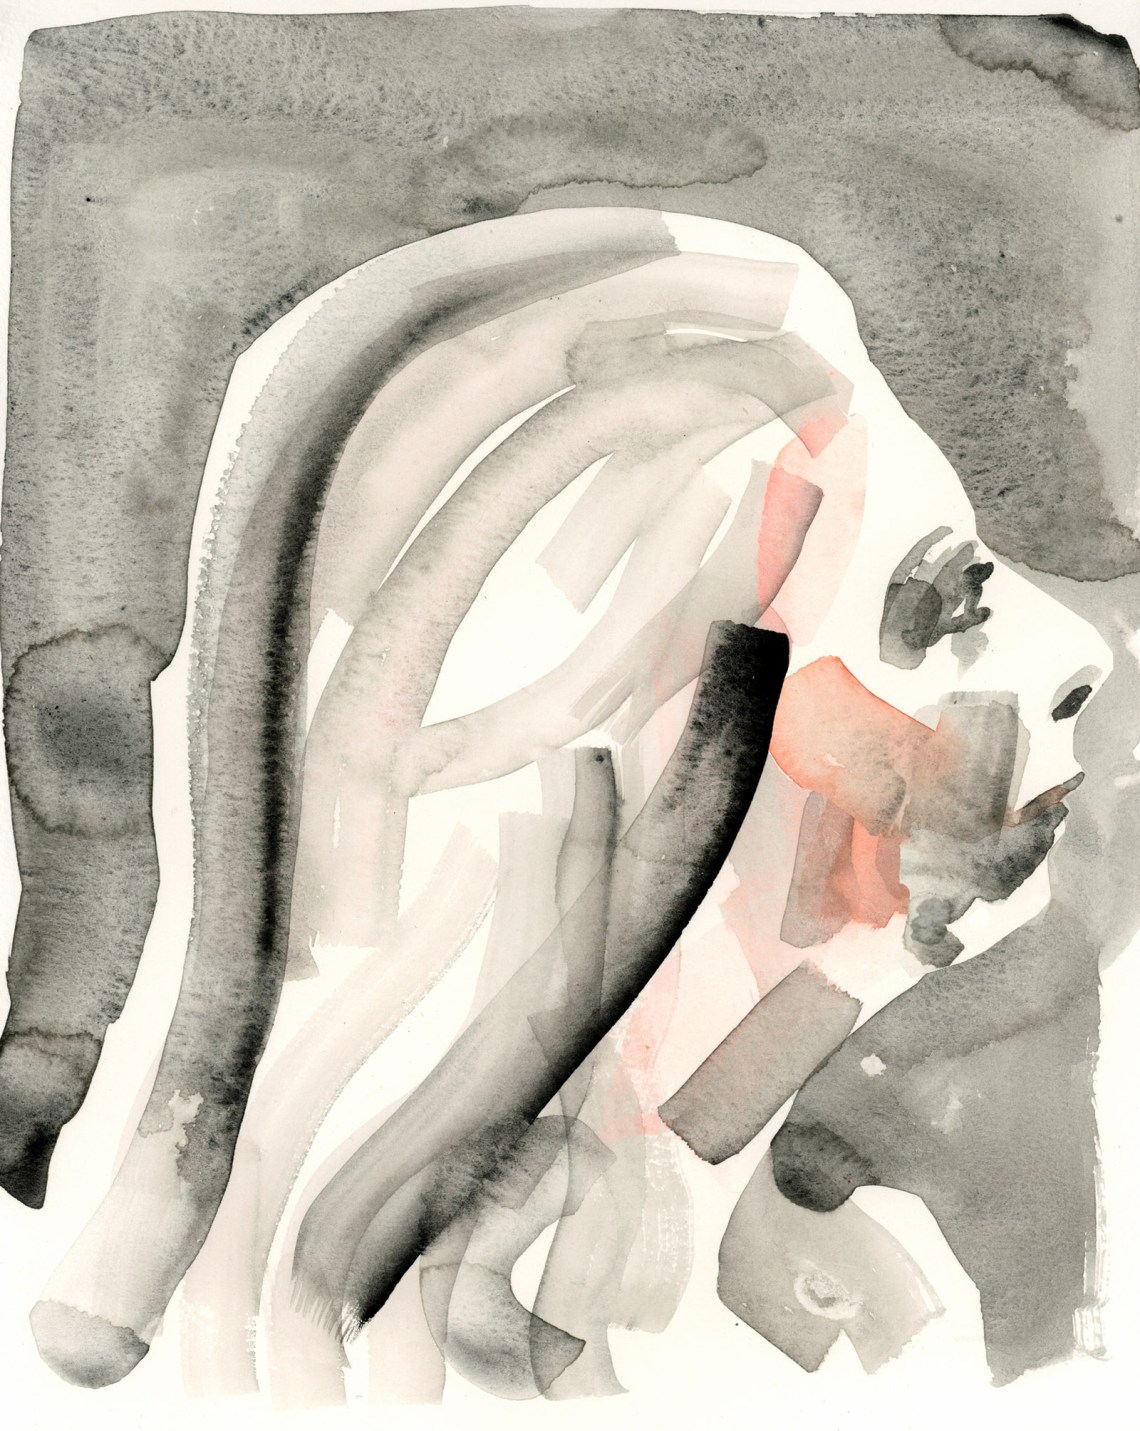 Hilary Mantel; illustration by Leanne Shapton